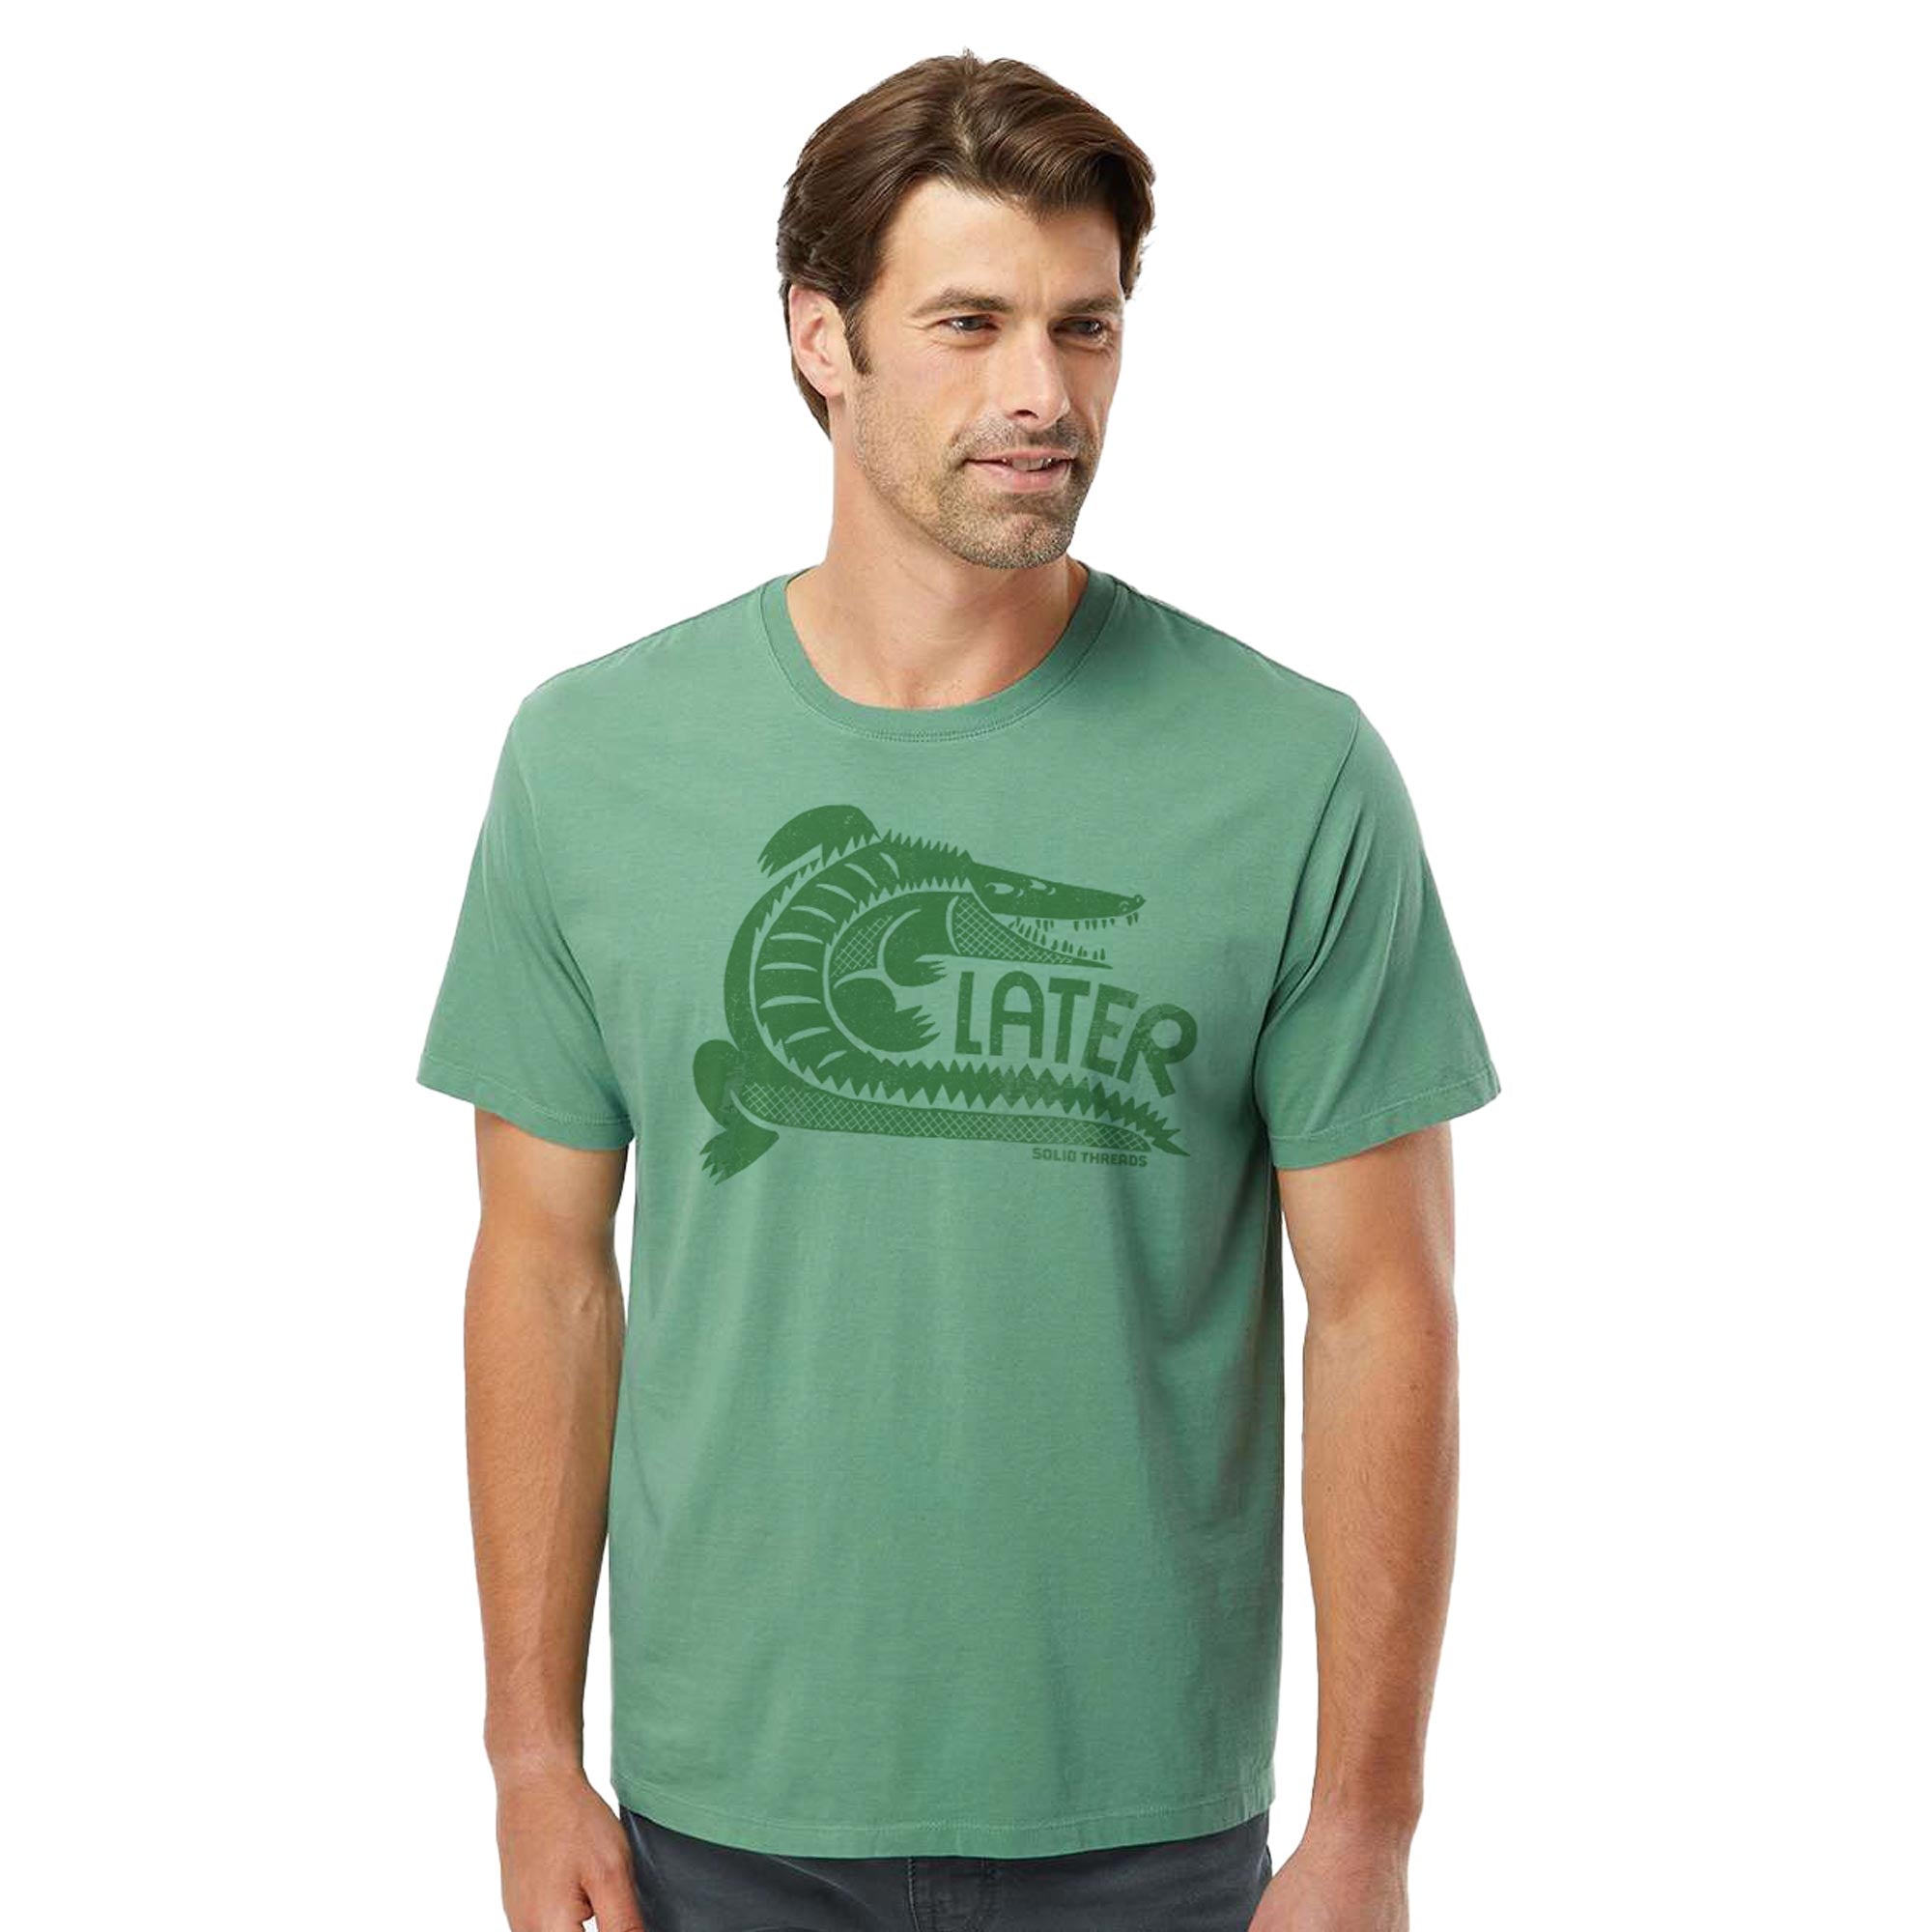 Later Gator Vintage Organic Cotton T-shirt | Cool Animal Beach  Tee On Model | Solid Threads